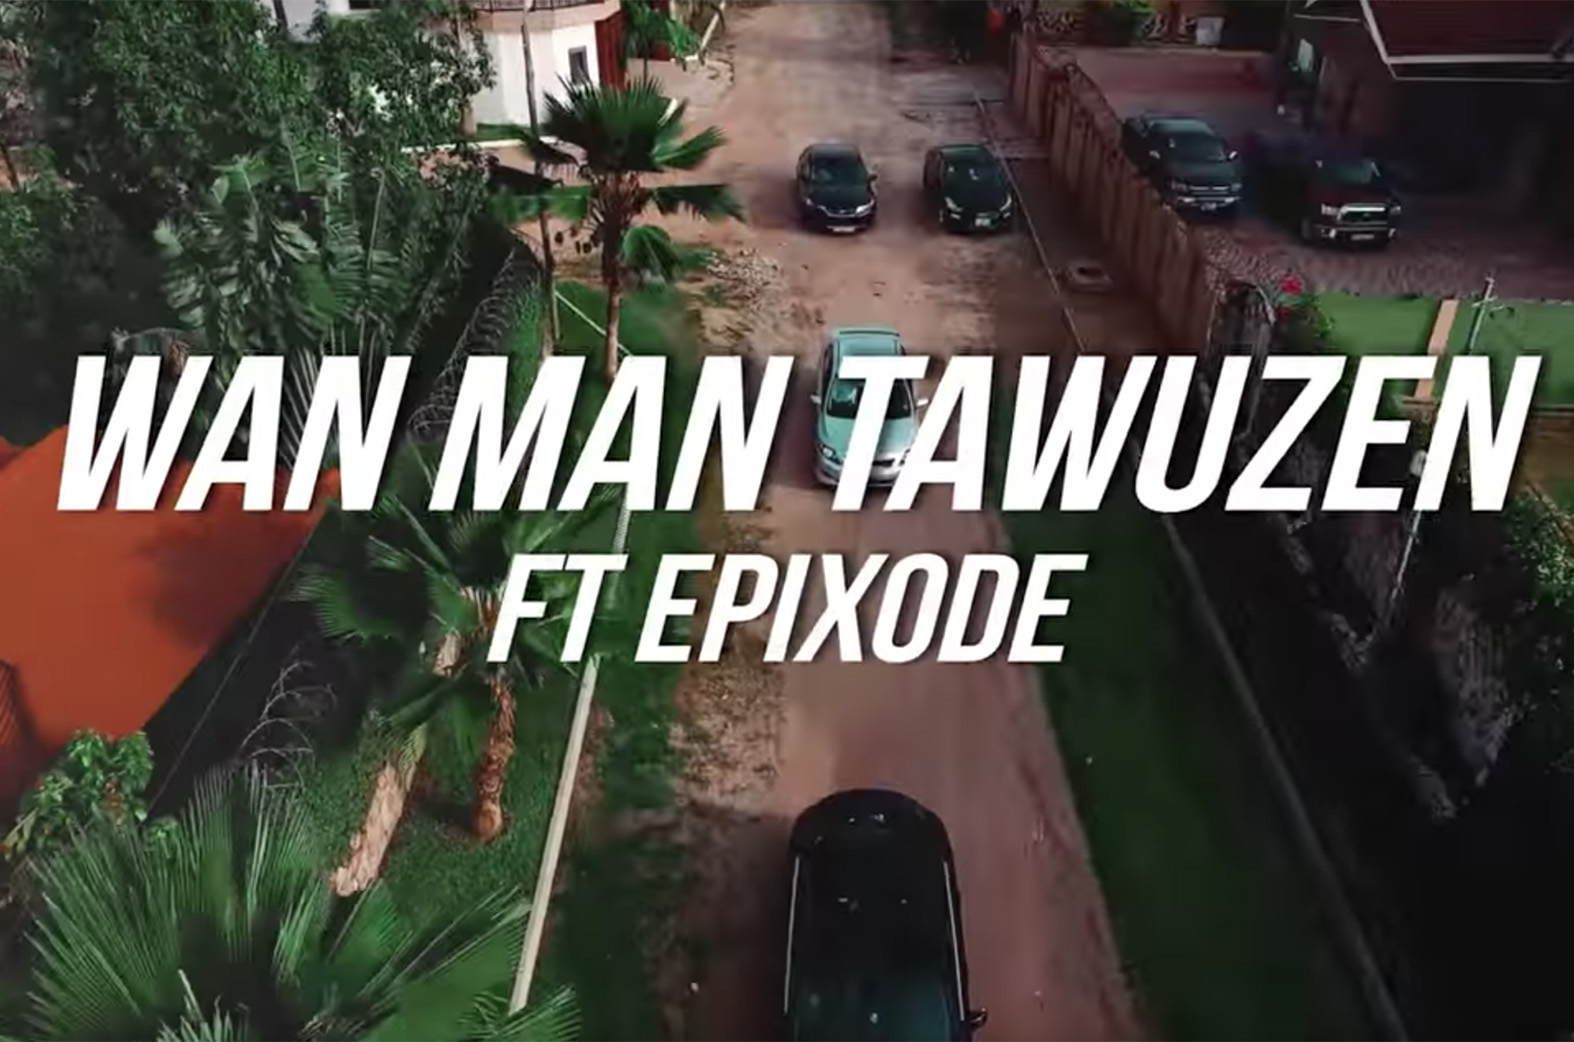 MoneyMad by WanMan Tawuzen feat. Epixode